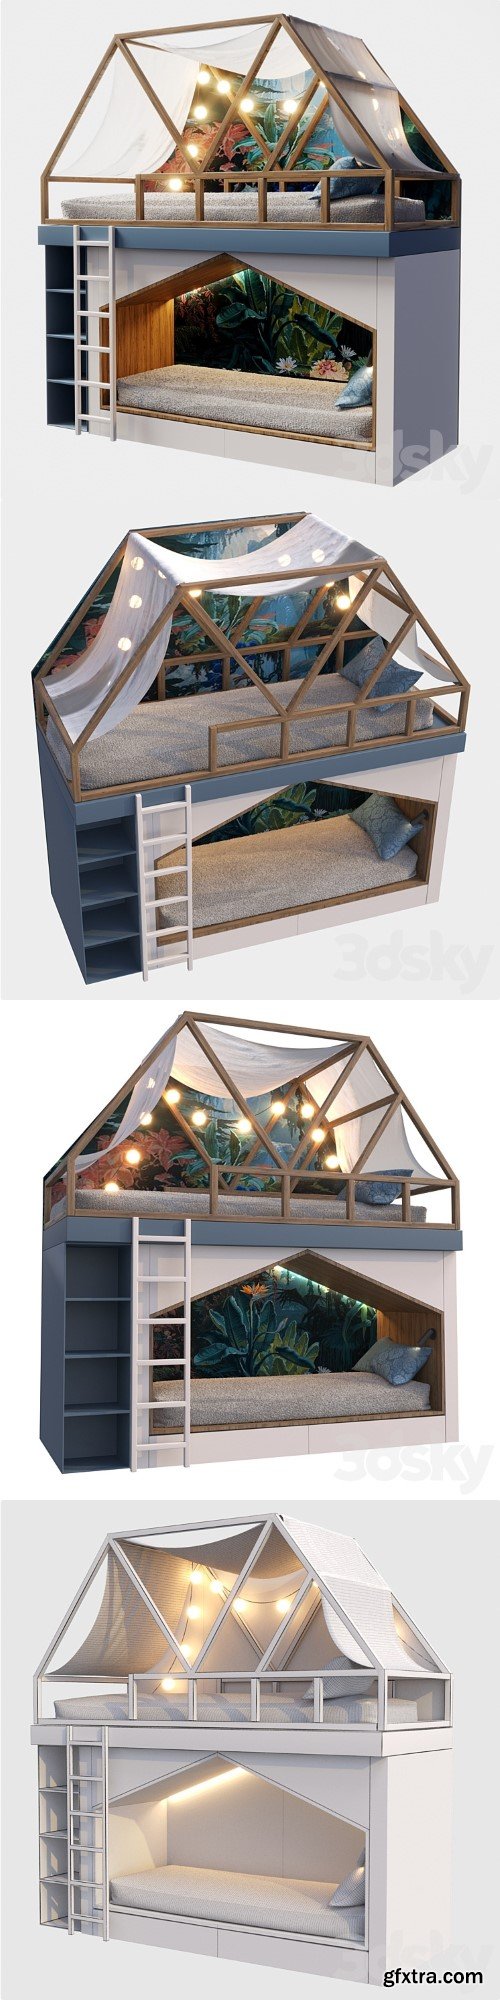 Pro 3DSky - Children bunk bed